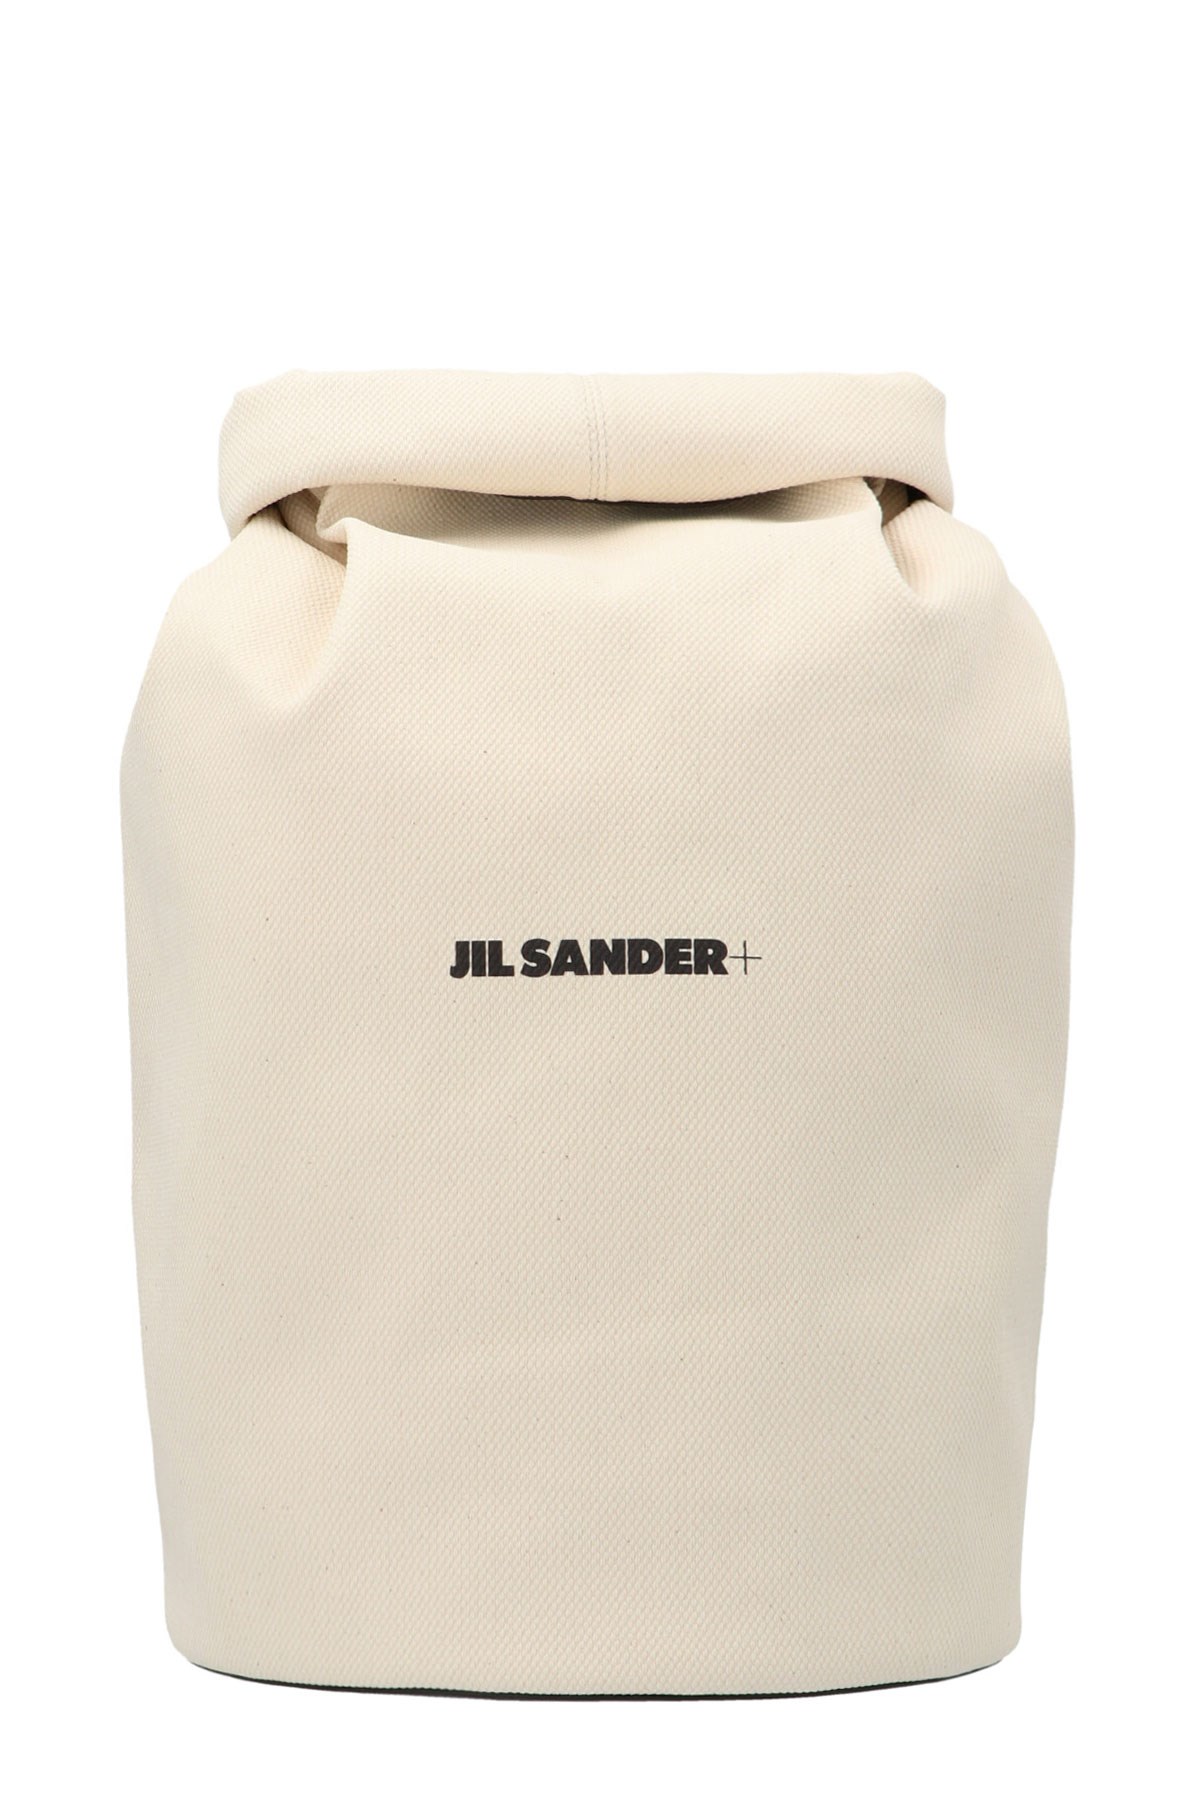 JIL SANDER 'Roll Duffle’ Handbag